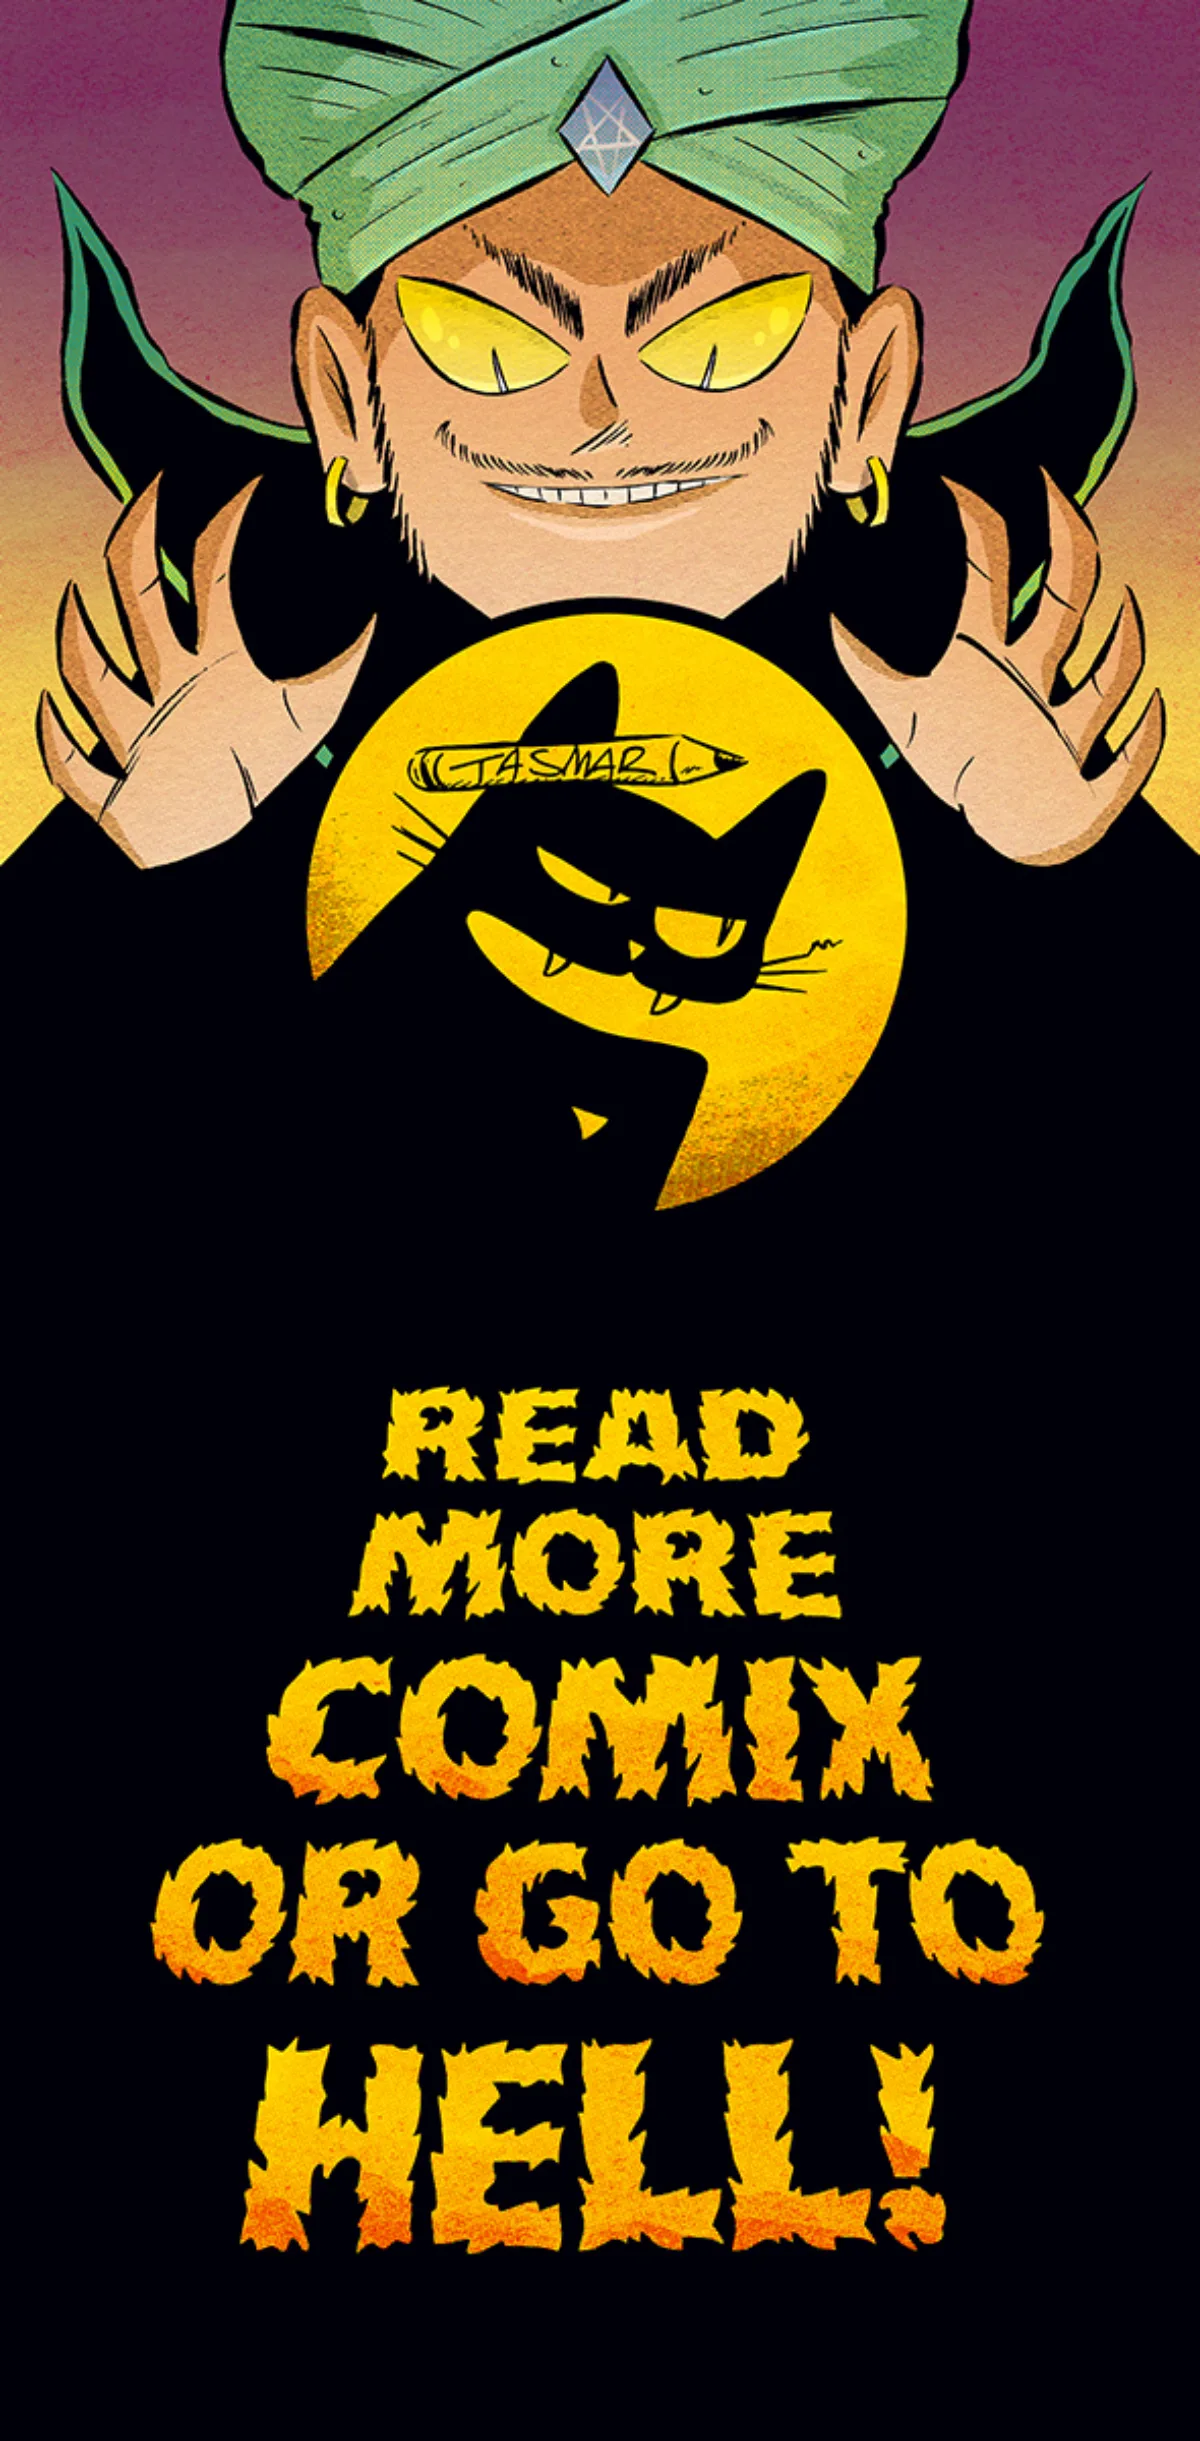 Read More Comix!